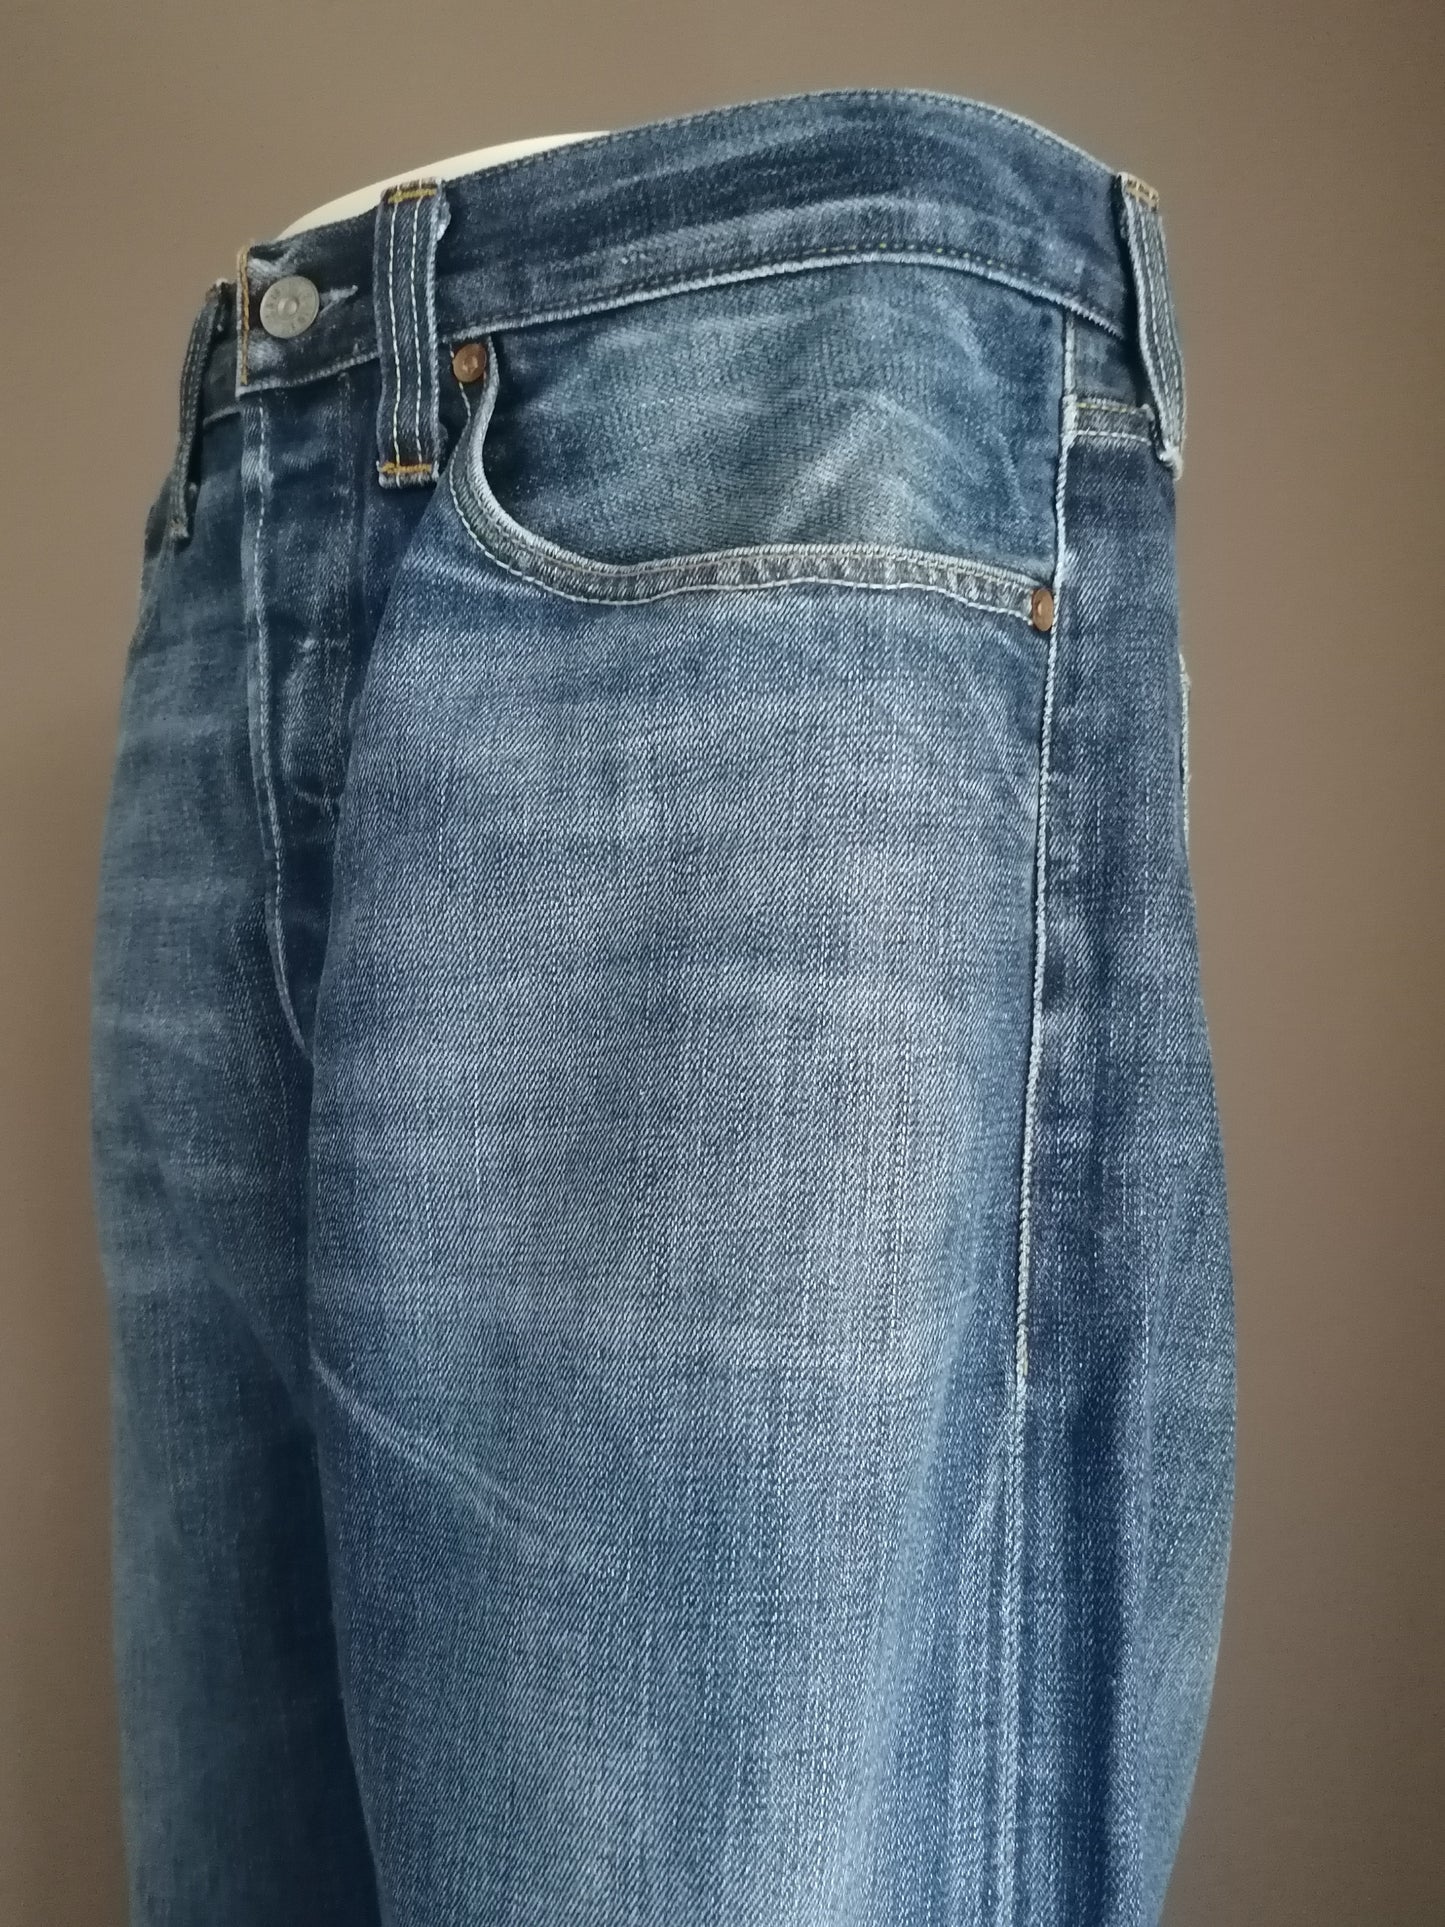 Levis Jeans. Blau gefärbt. W34 - L28.